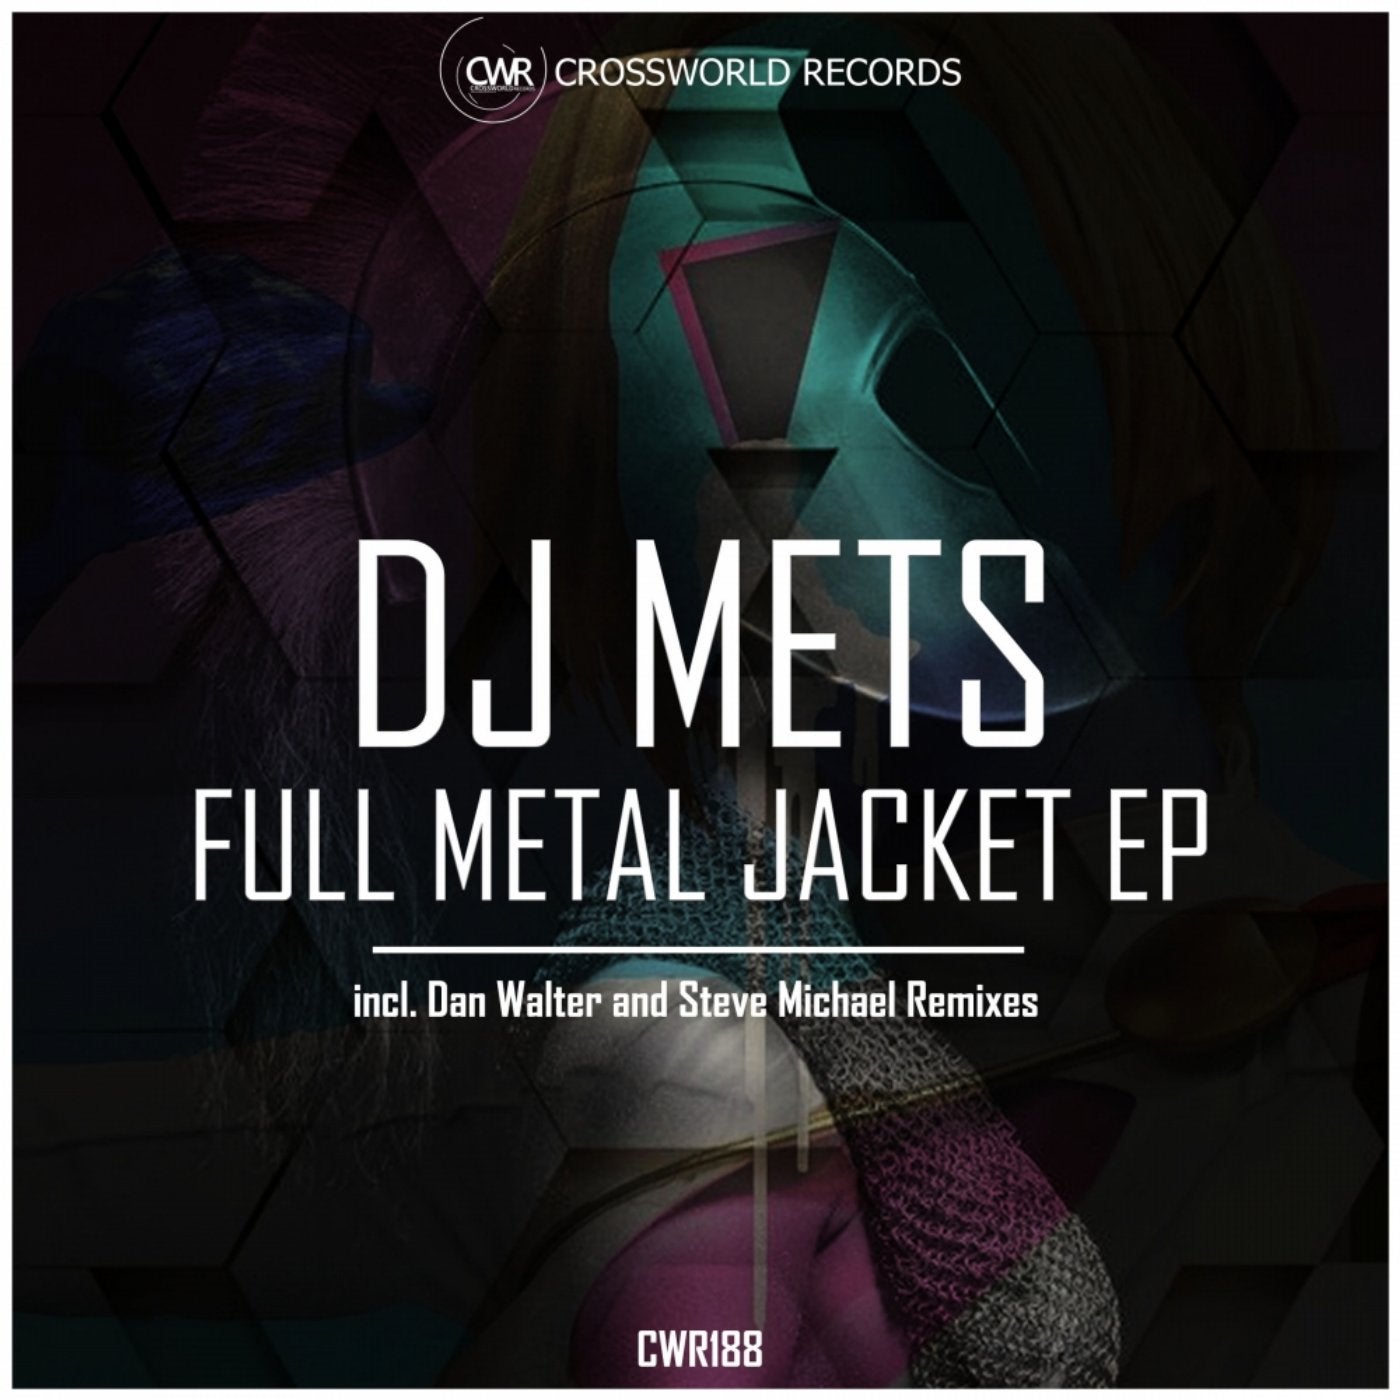 Full Metal Jacket EP